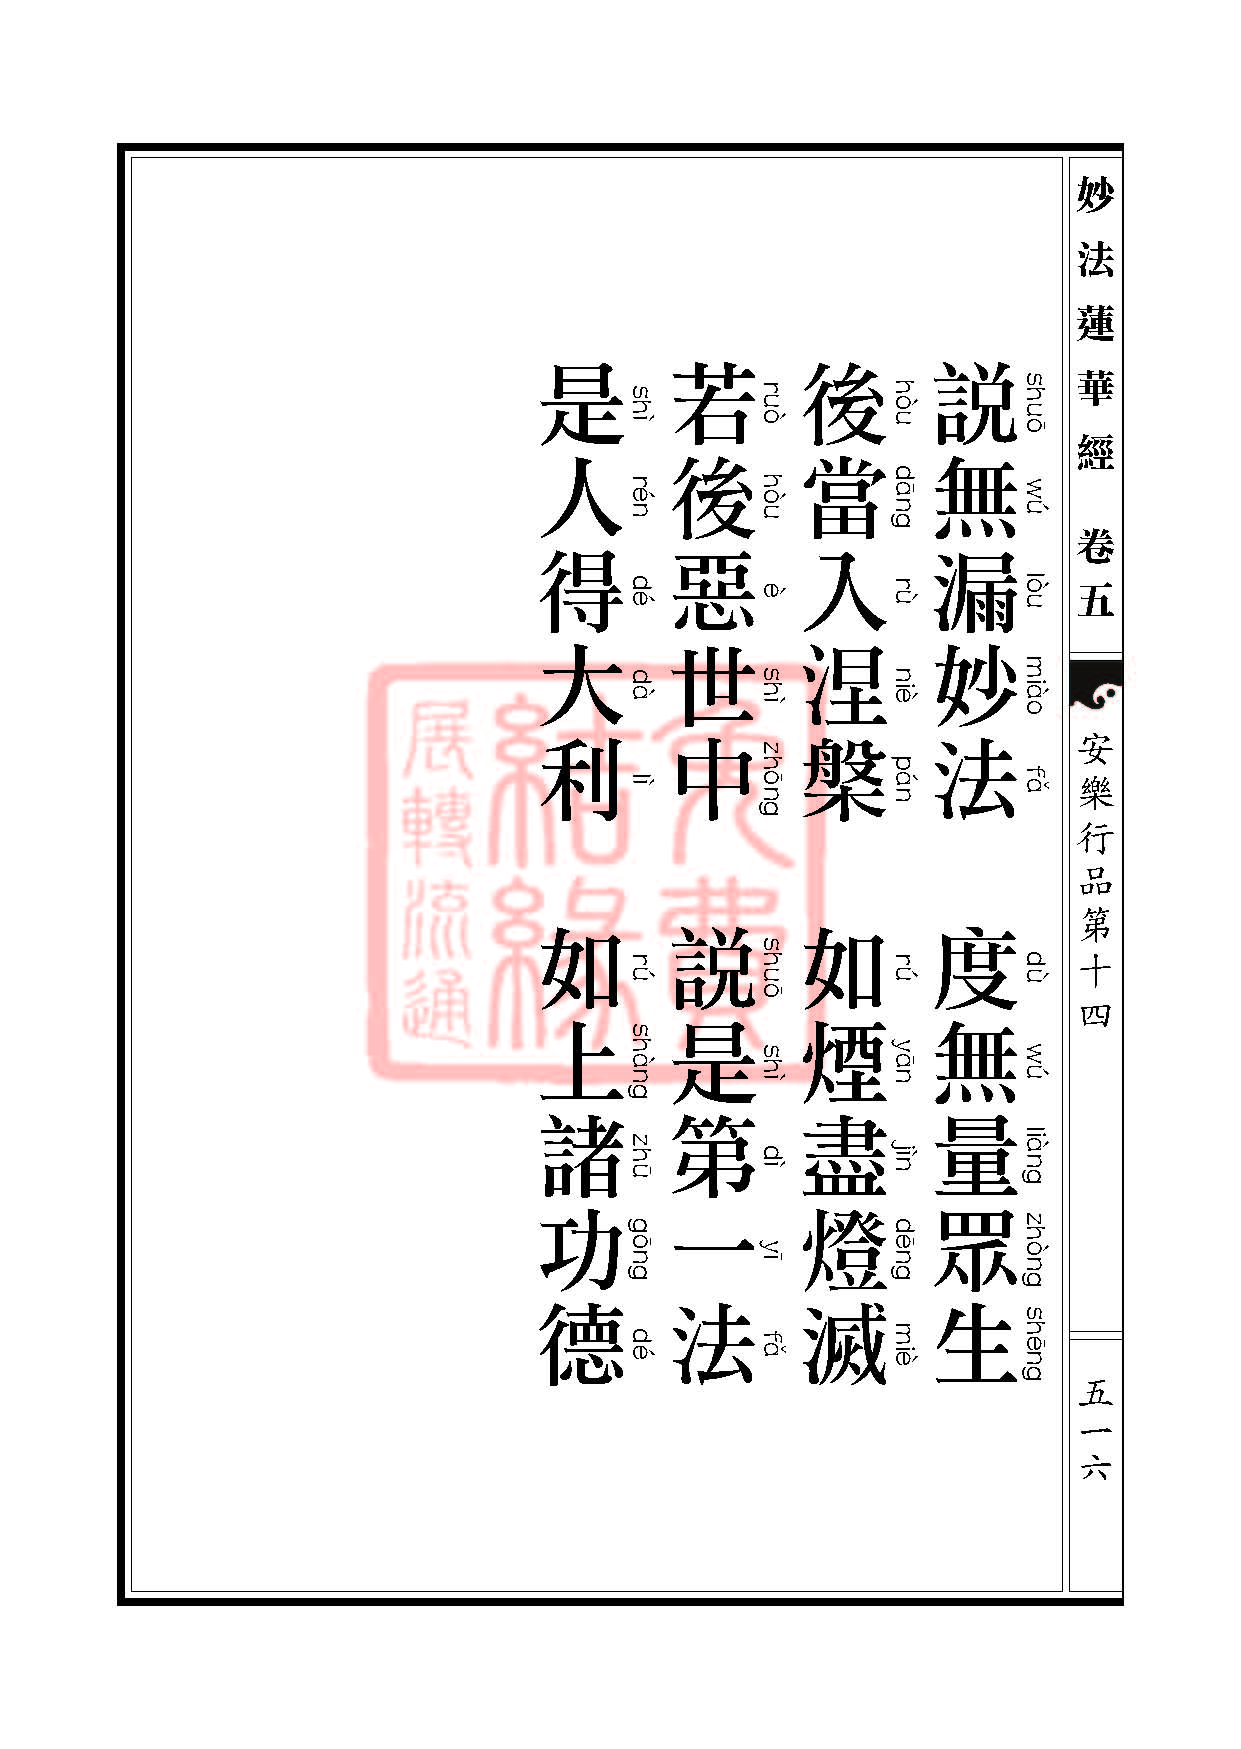 Book_FHJ_HK-A6-PY_Web_页面_516.jpg